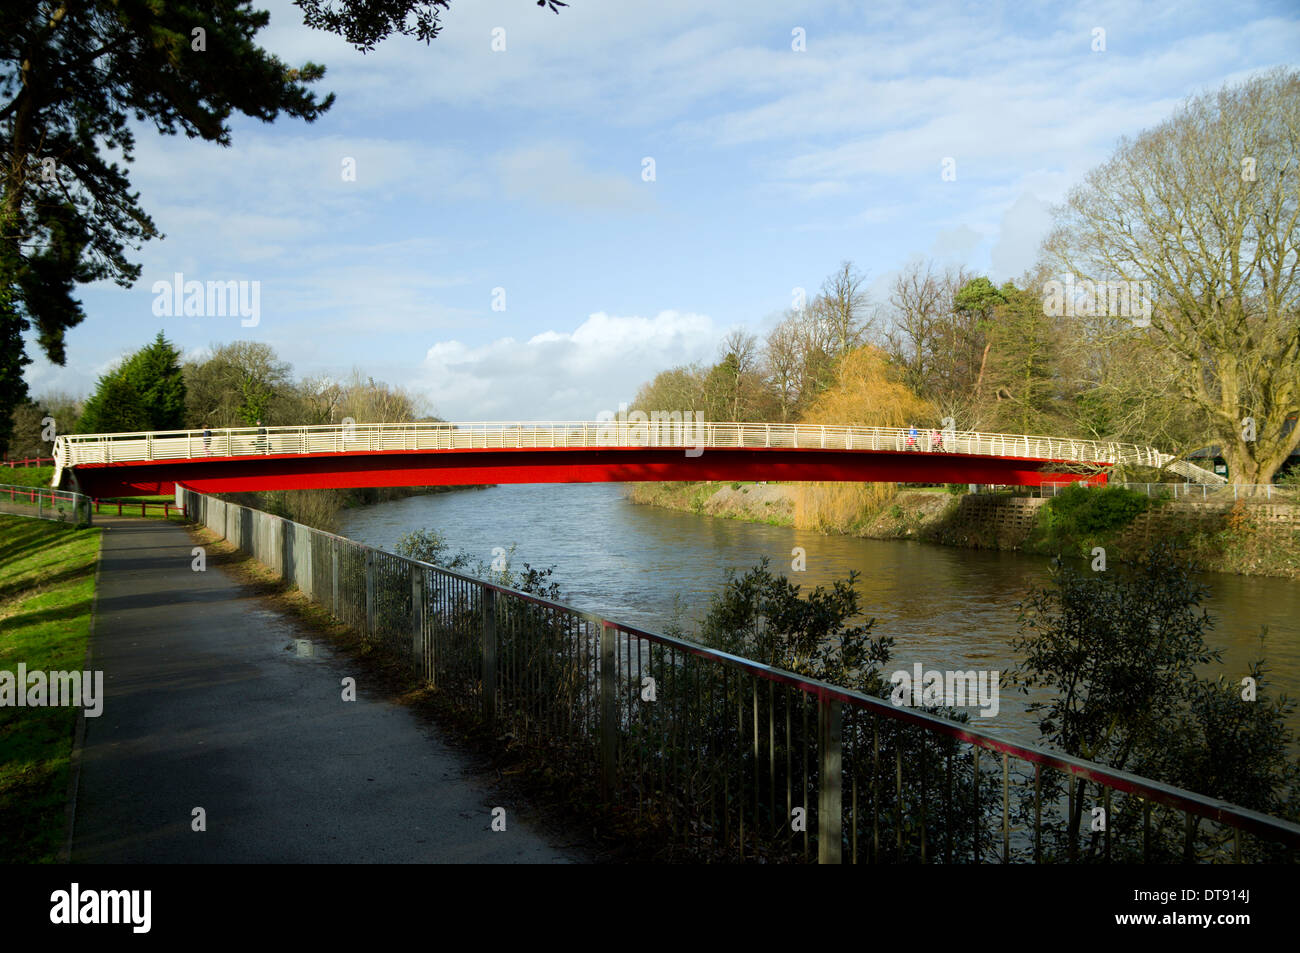 Millennium Footbridge crossing the River Taff between Sophia Gardens and Bute Park, Cardiff, Wales. Stock Photo